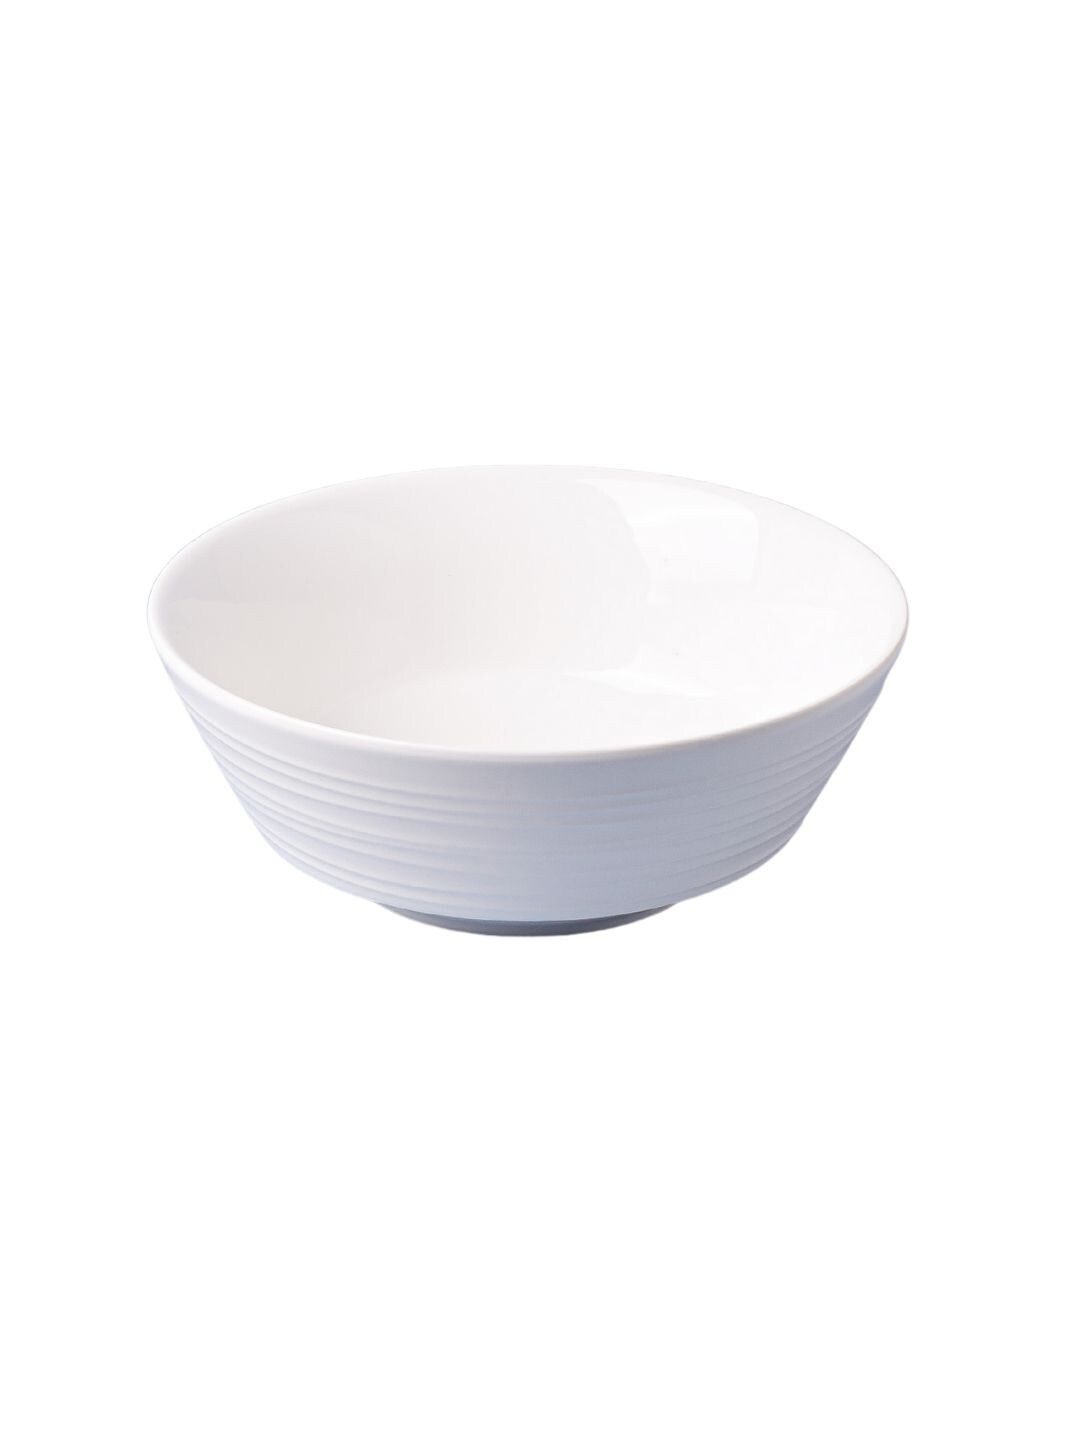 Nestasia White 1 Piece Textured Ceramic Matte Bowl Price in India